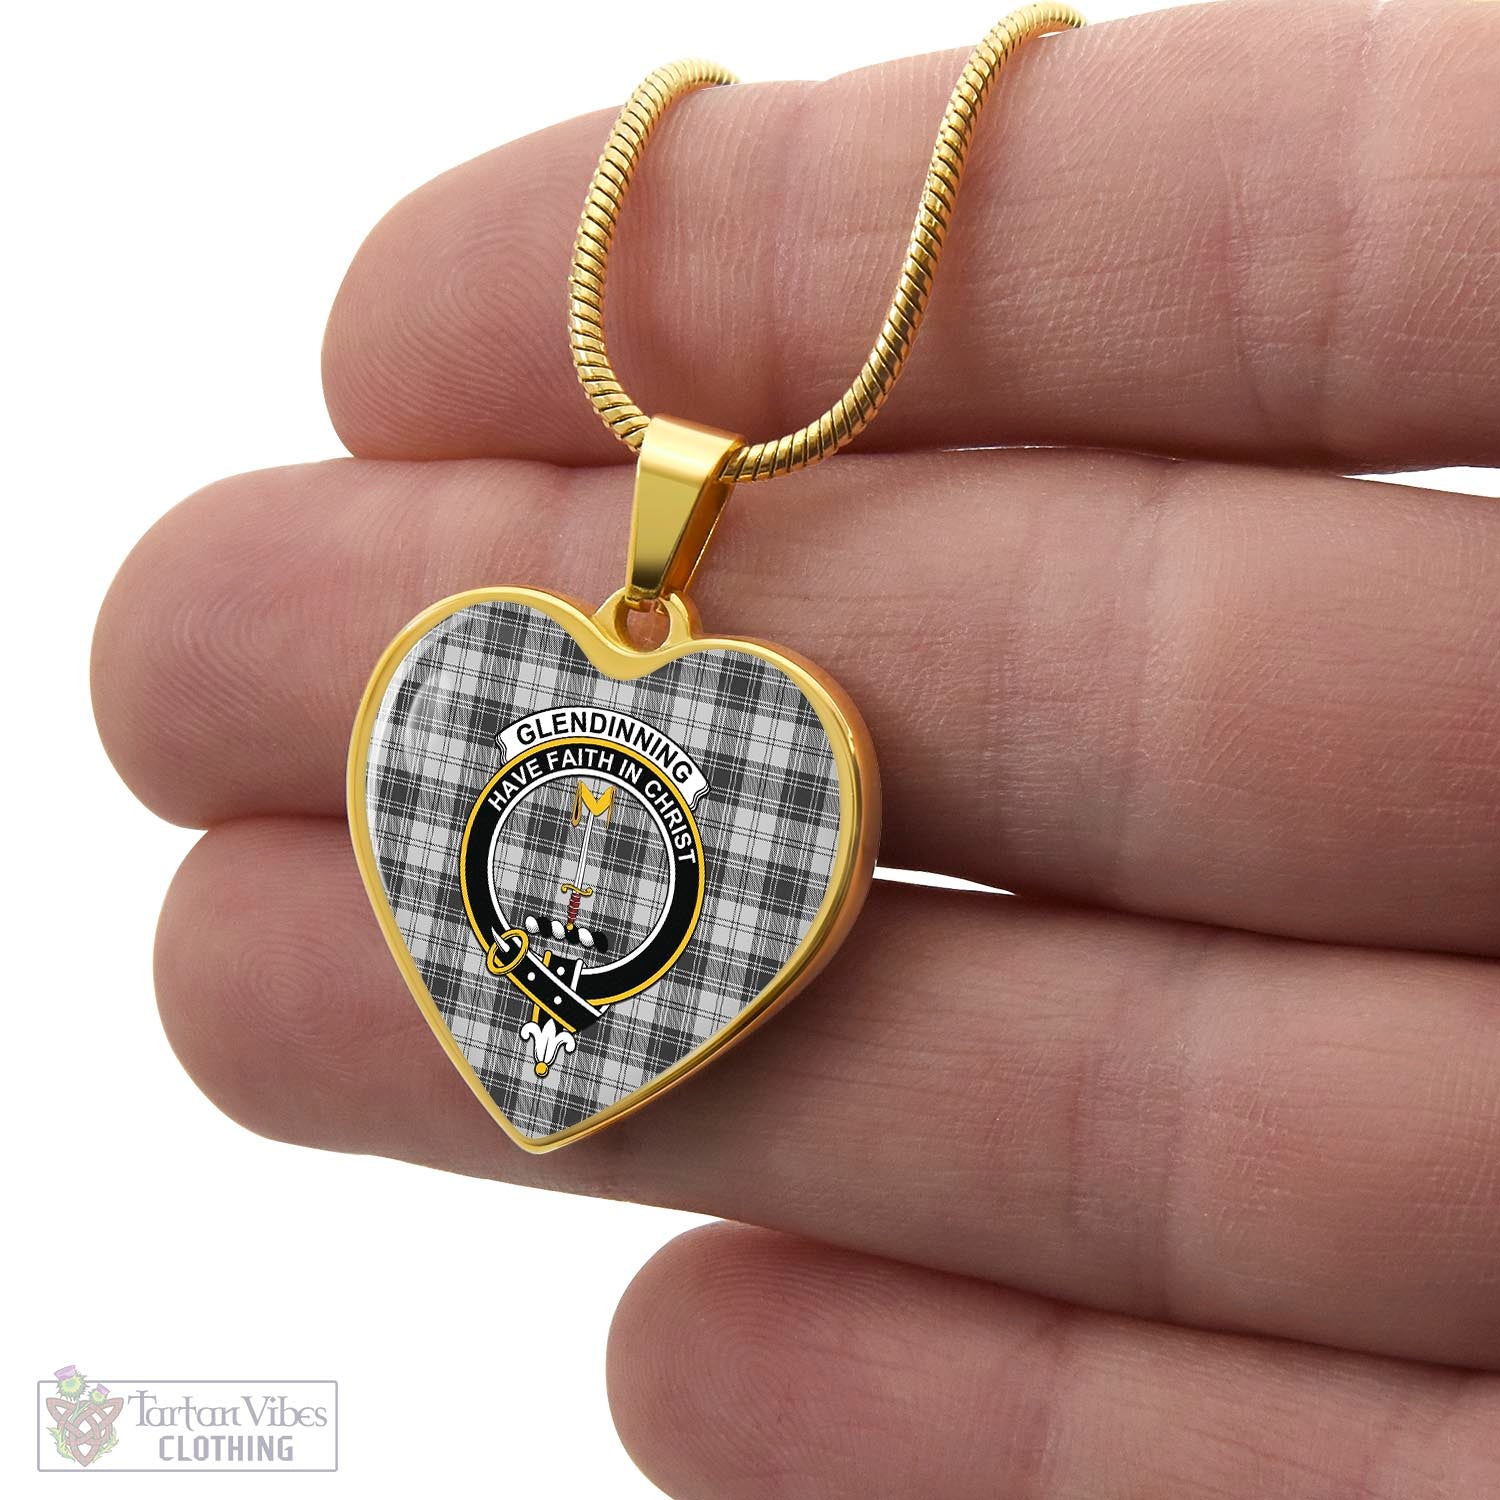 Tartan Vibes Clothing Glendinning Tartan Heart Necklace with Family Crest